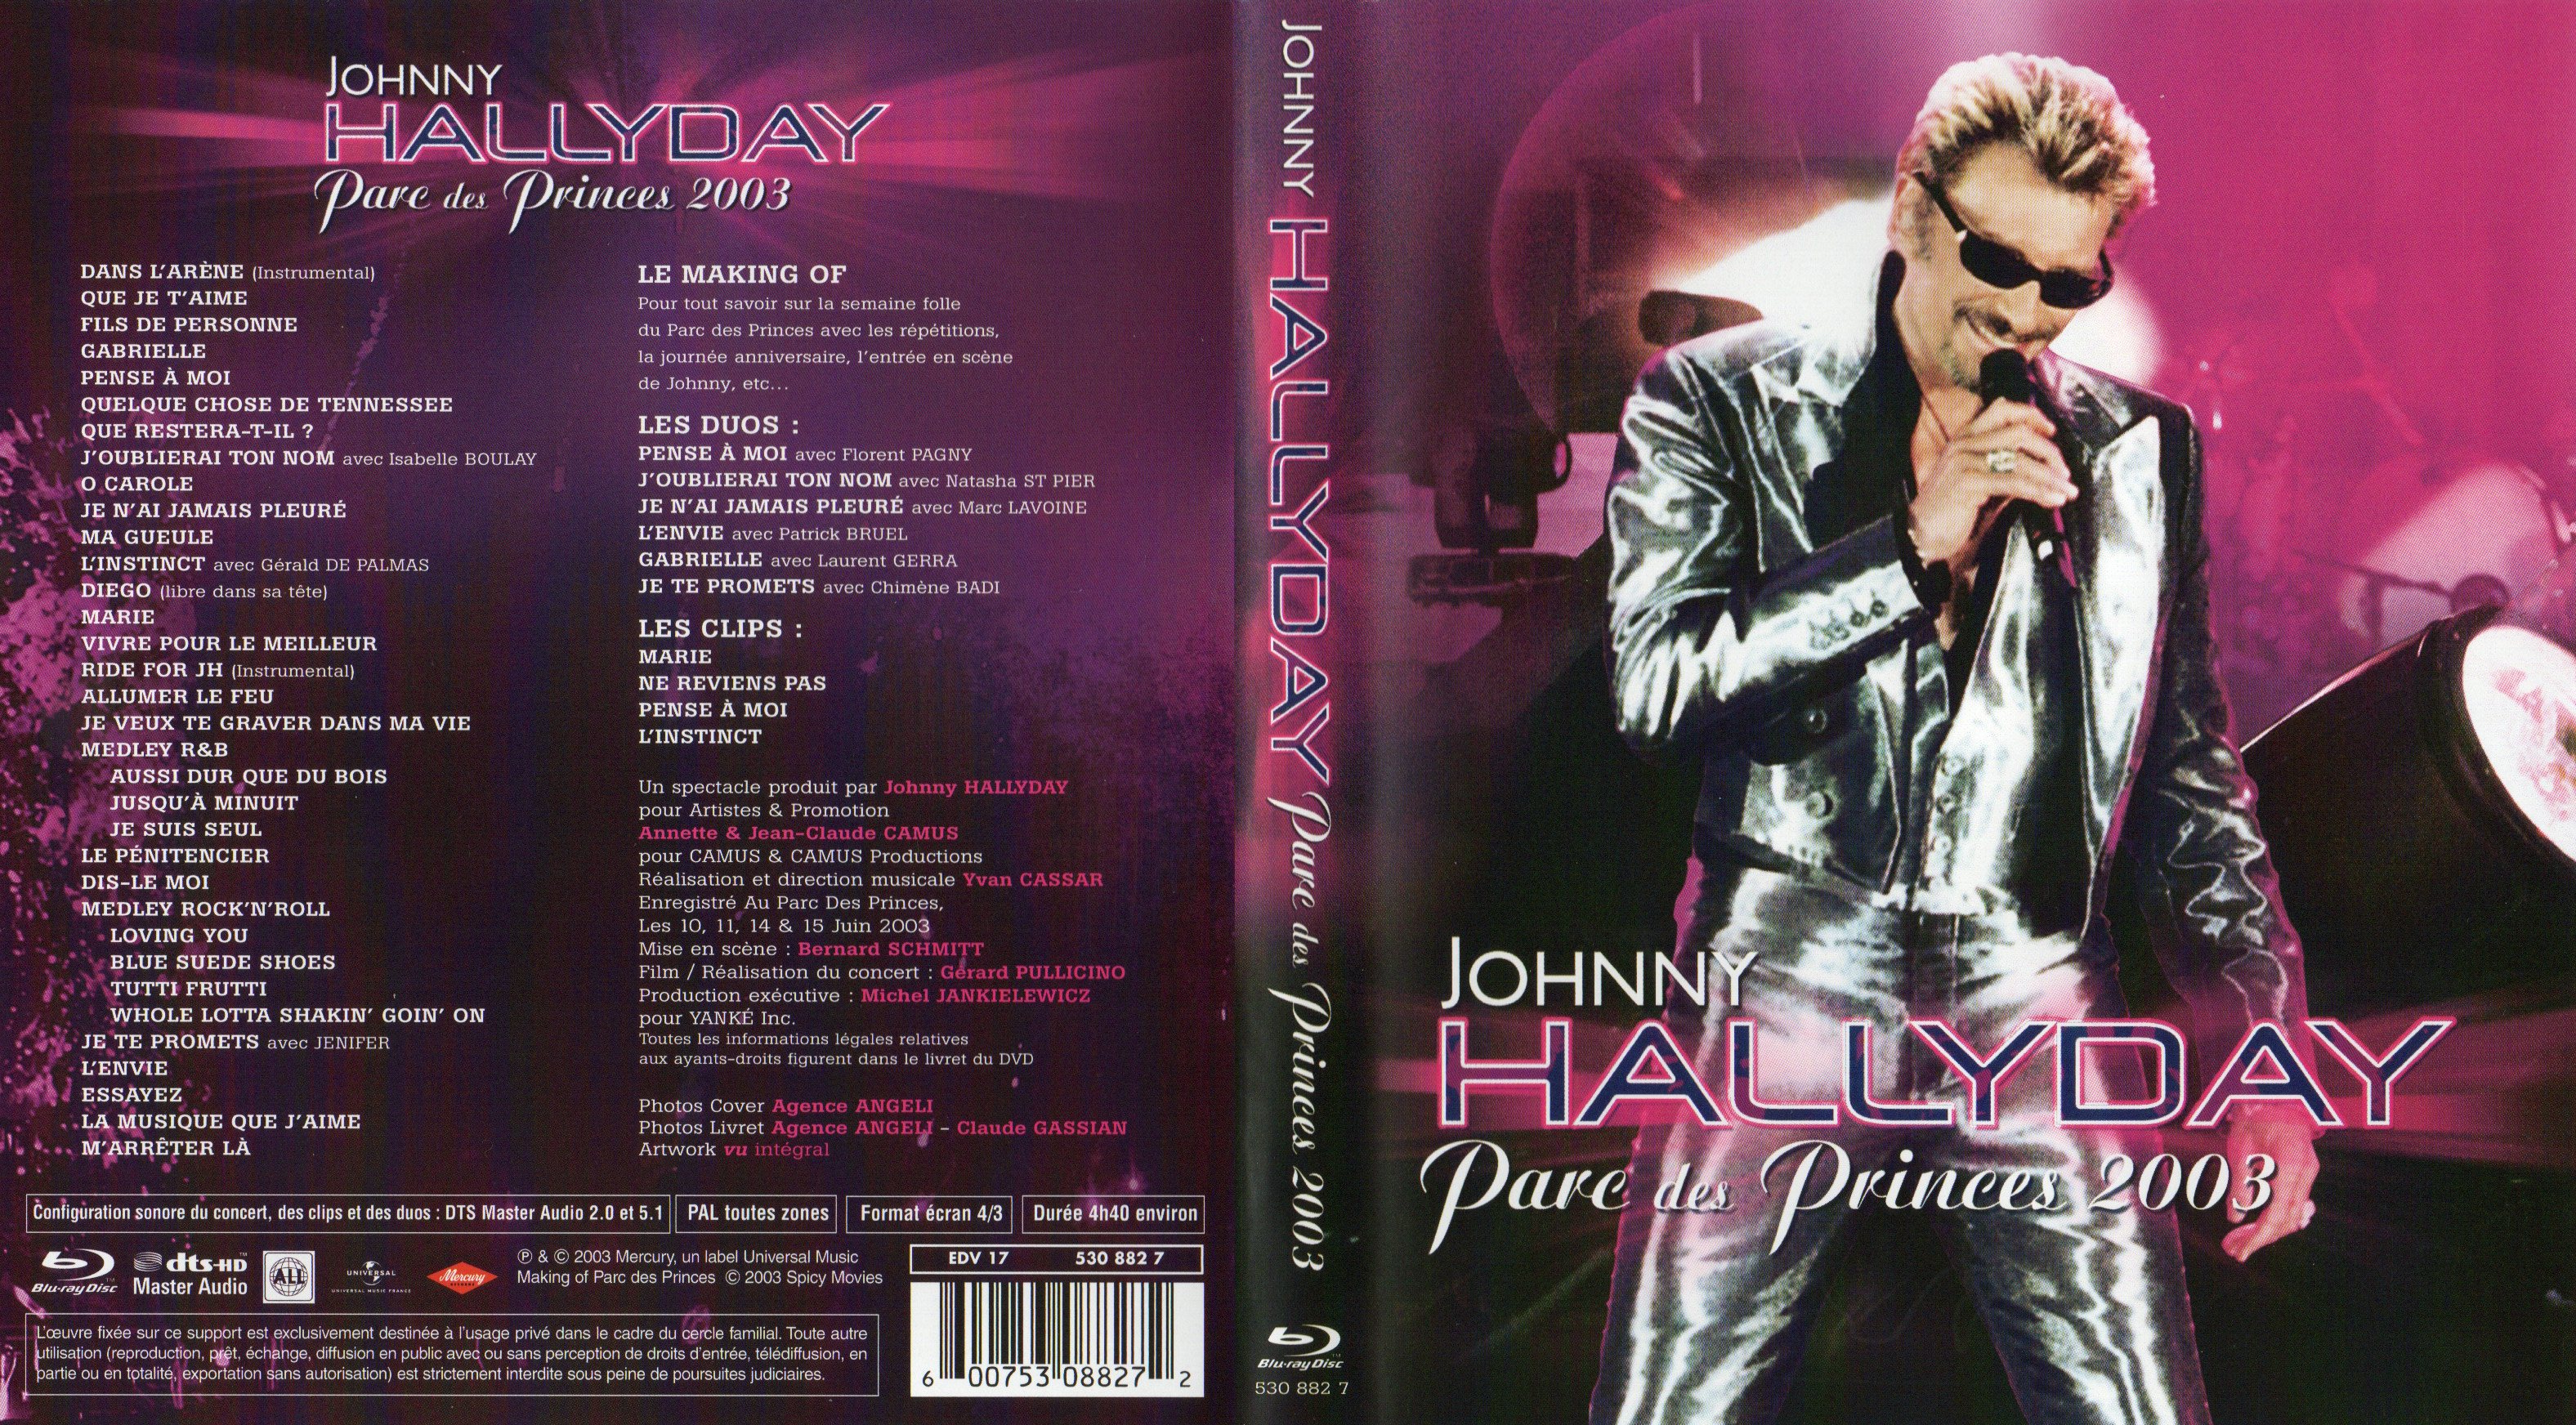 Jaquette DVD Johnny Hallyday Parc des Princes 2003 (BLU-RAY)